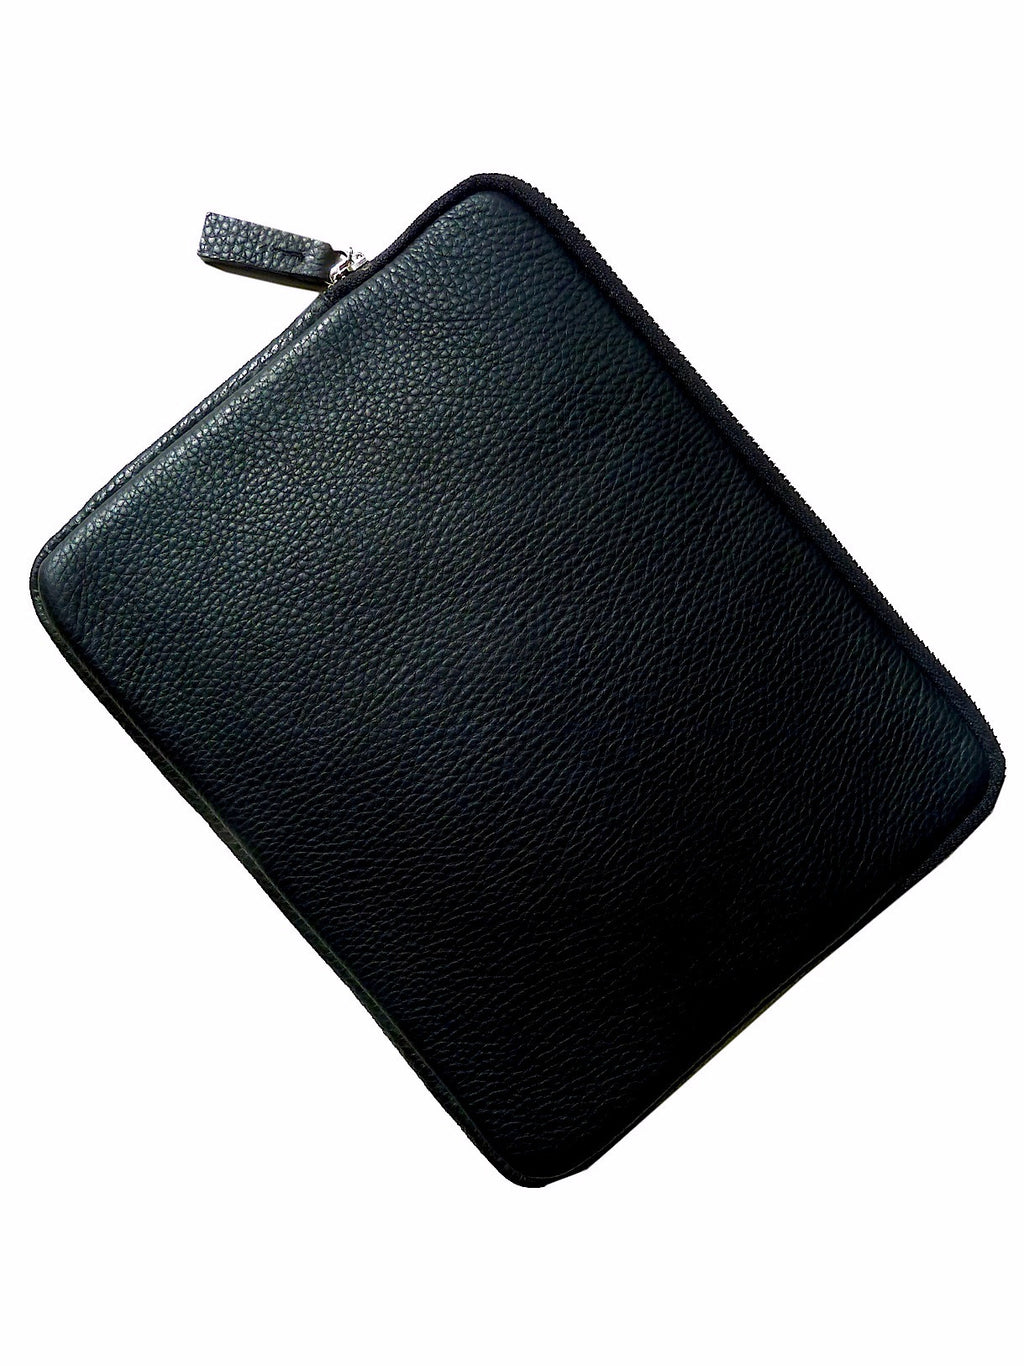 Ipad Case Pebble Grain Leather Black